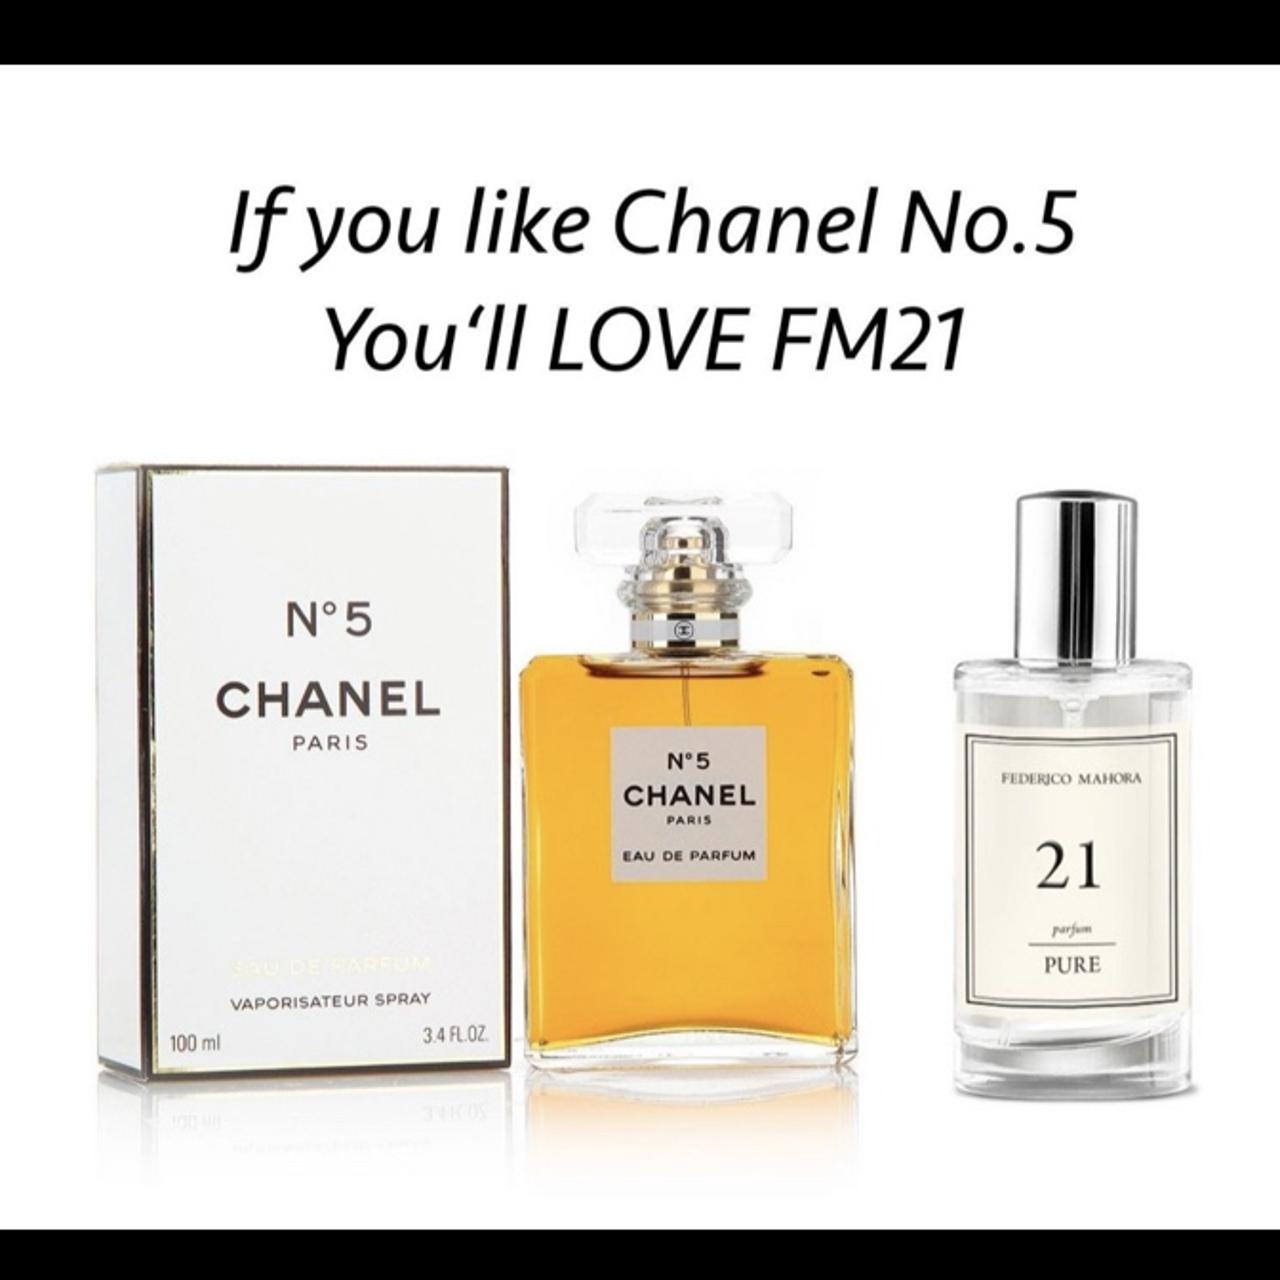 Fm no 21 perfume, Smells exactly like Chanel no 5